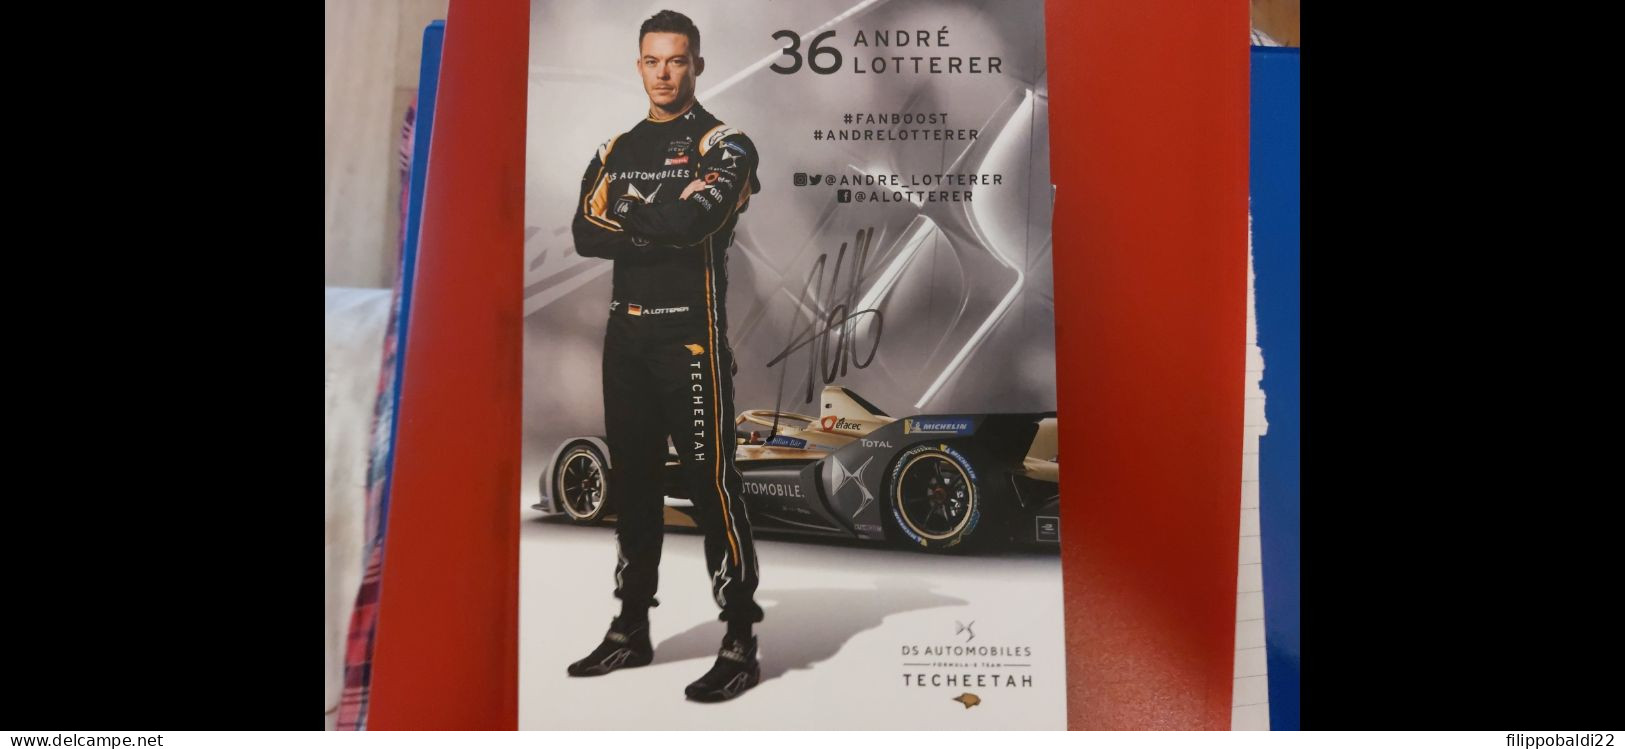 Andre Lotterer Autografo Autograph Signed - Car Racing - F1